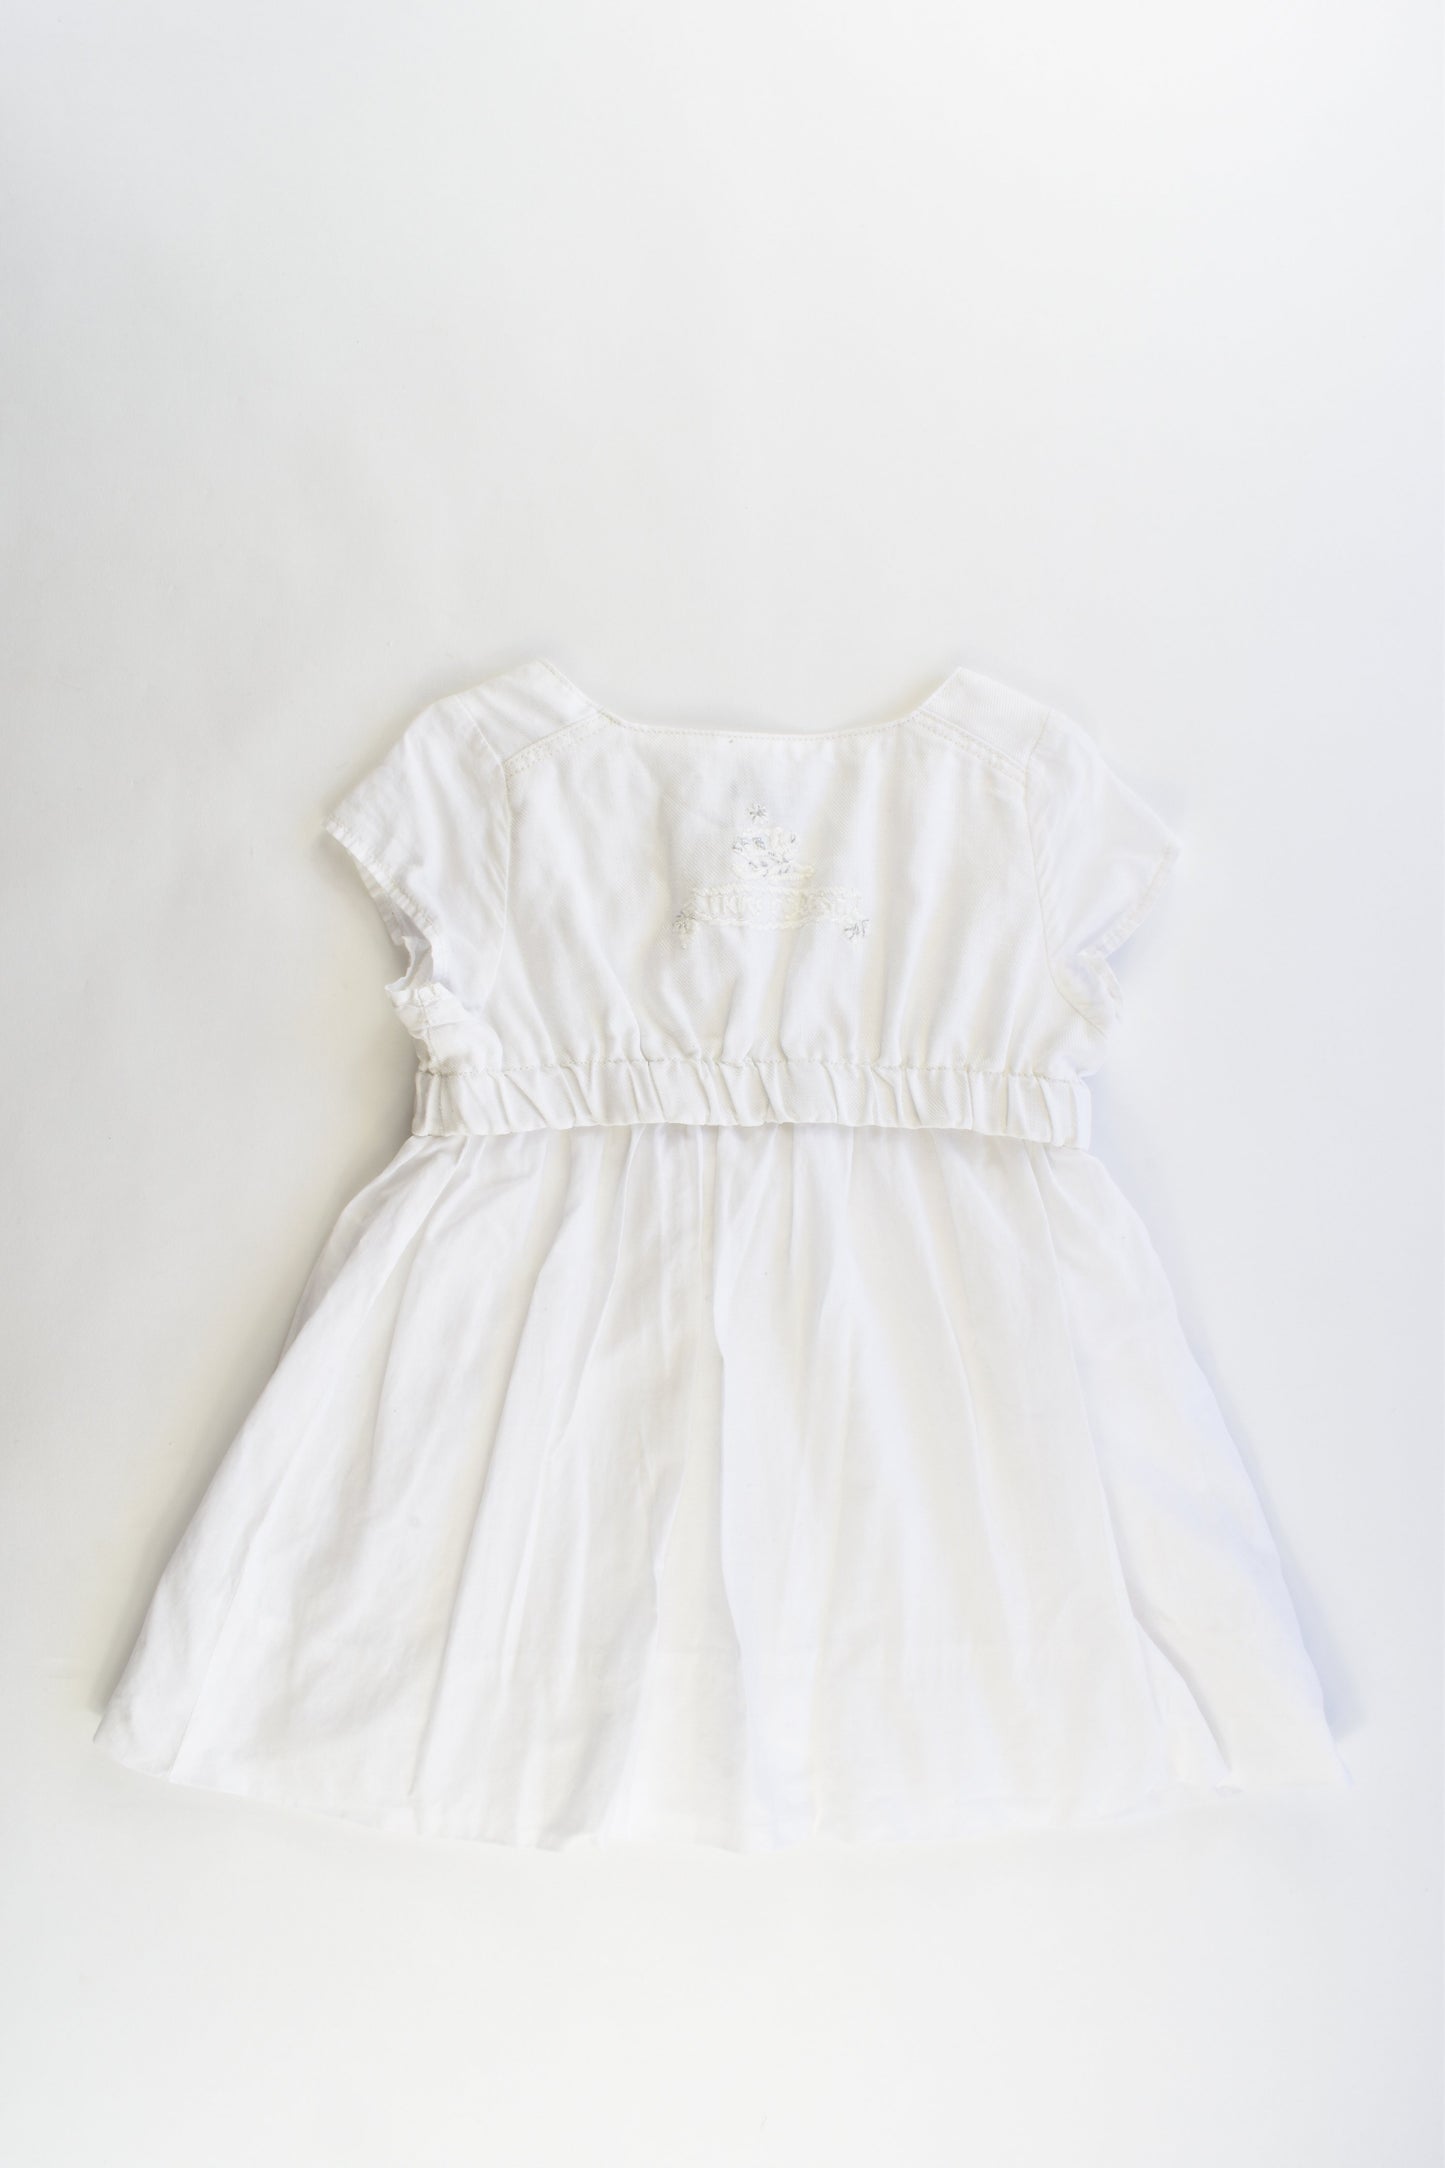 Ikks Size 3 (94 cm) Dress